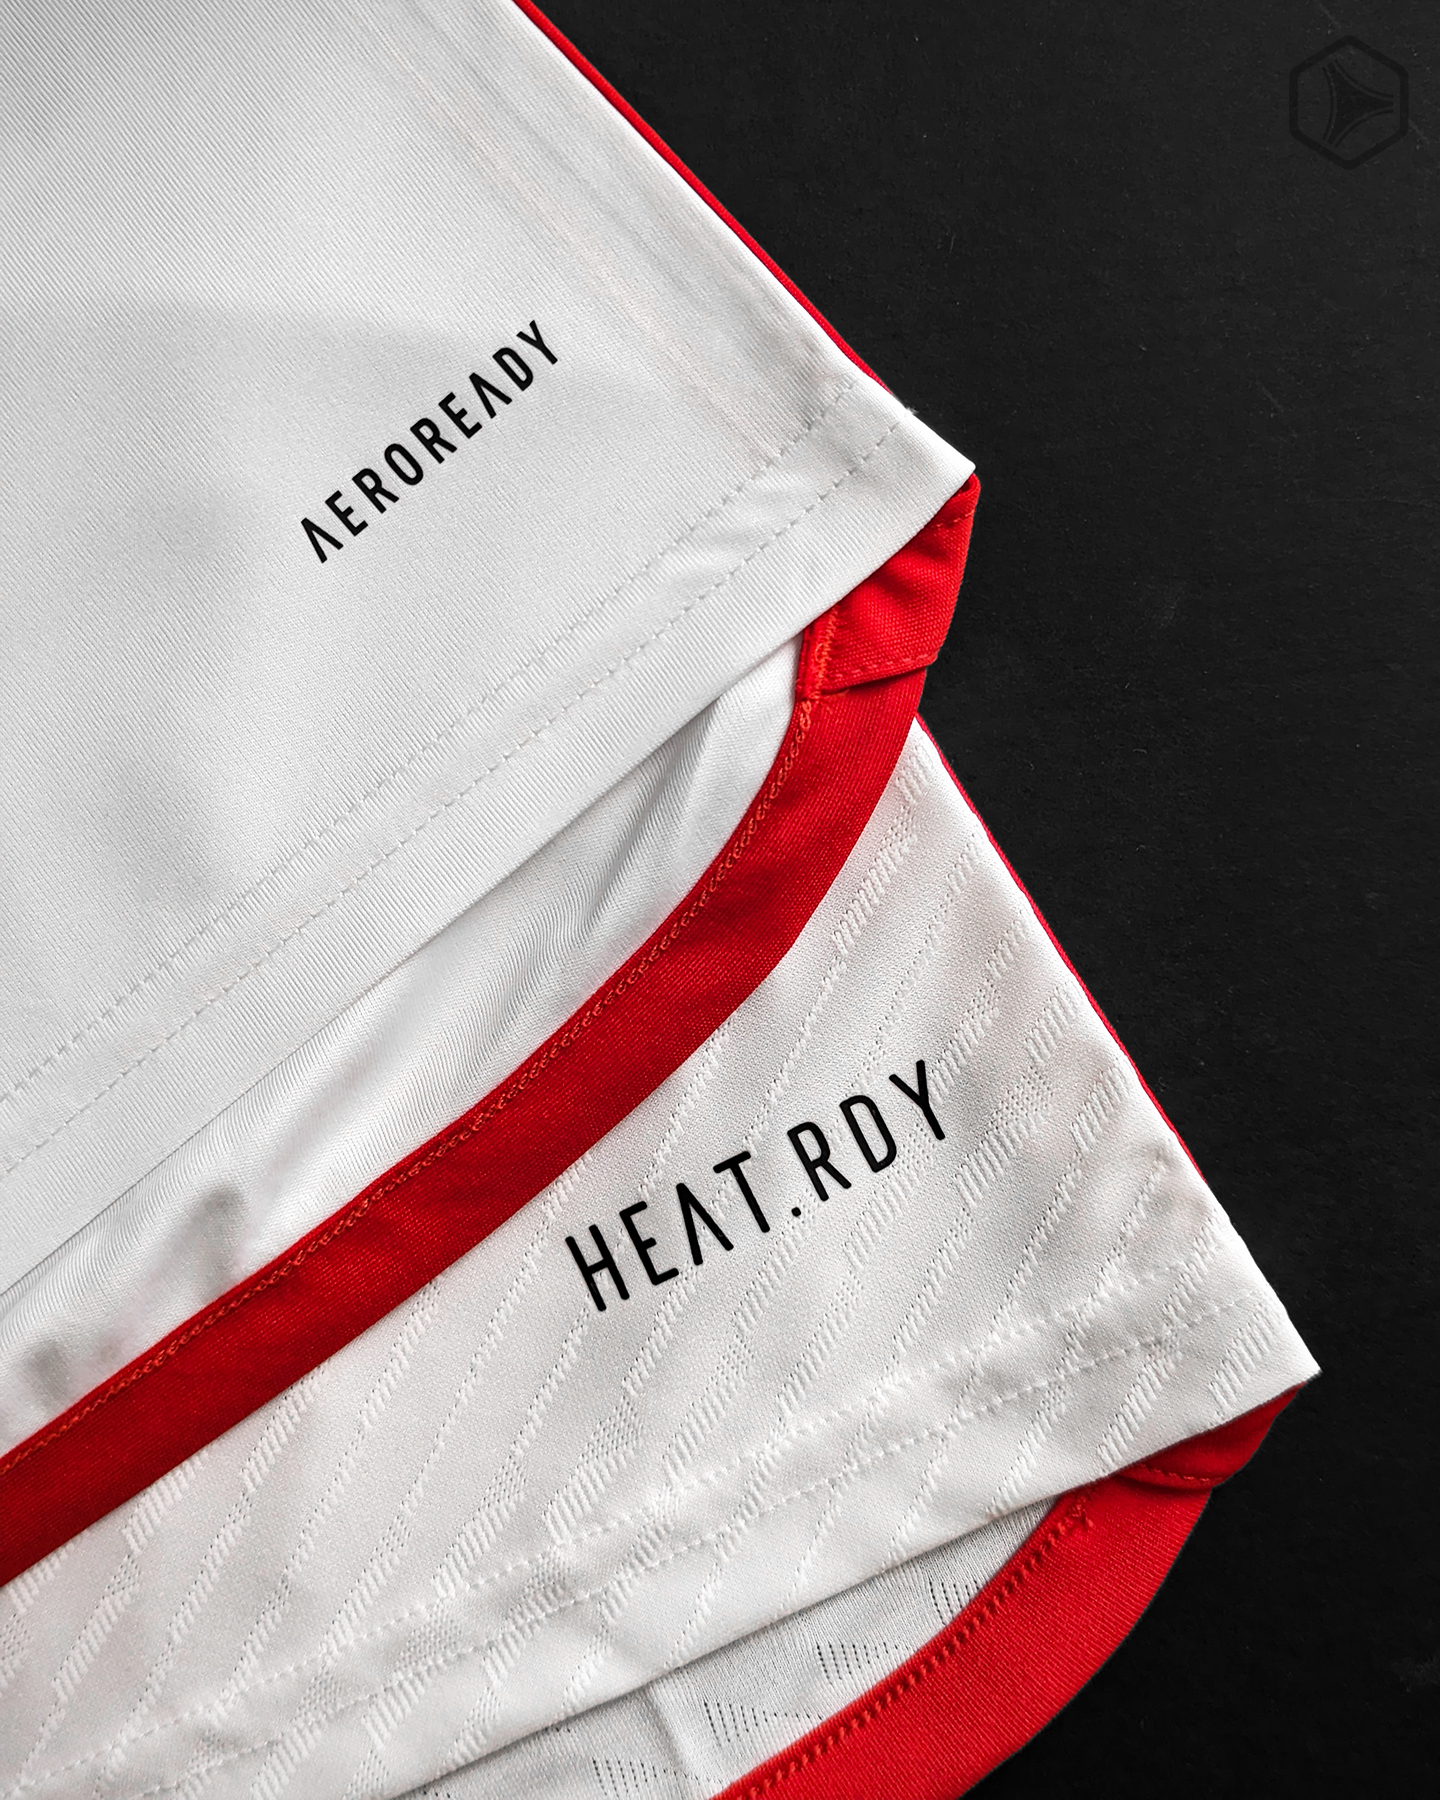 Camisetas adidas HEAT.RDY vs Aeroready